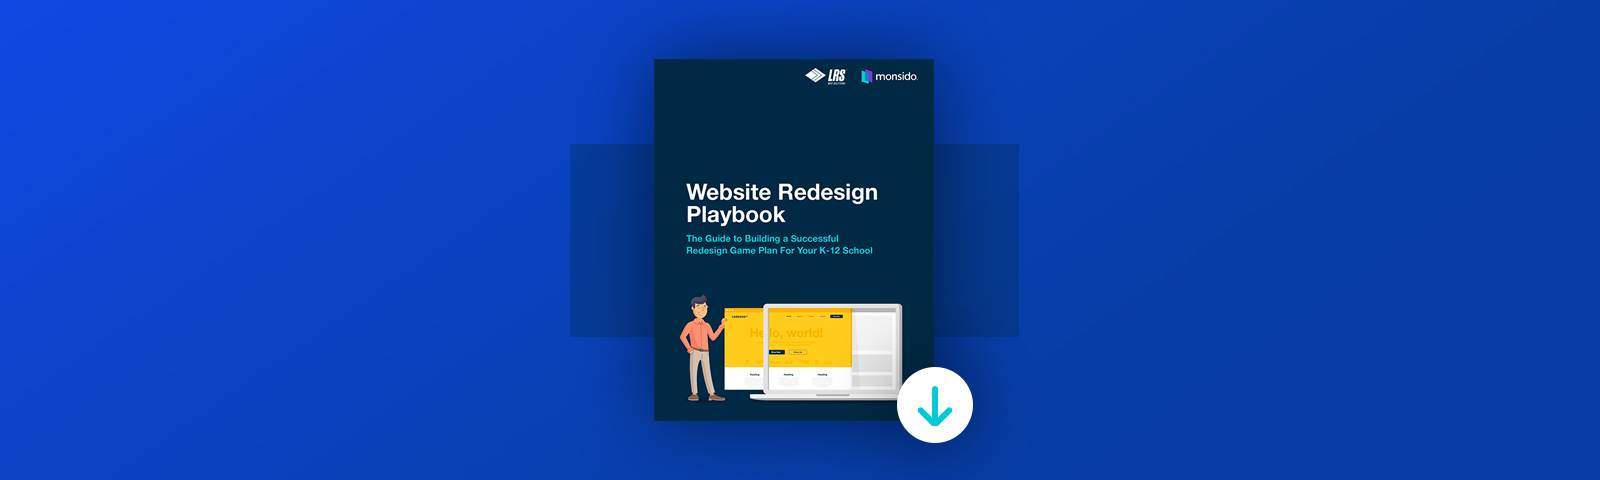 Download The Website Redesign Playbook